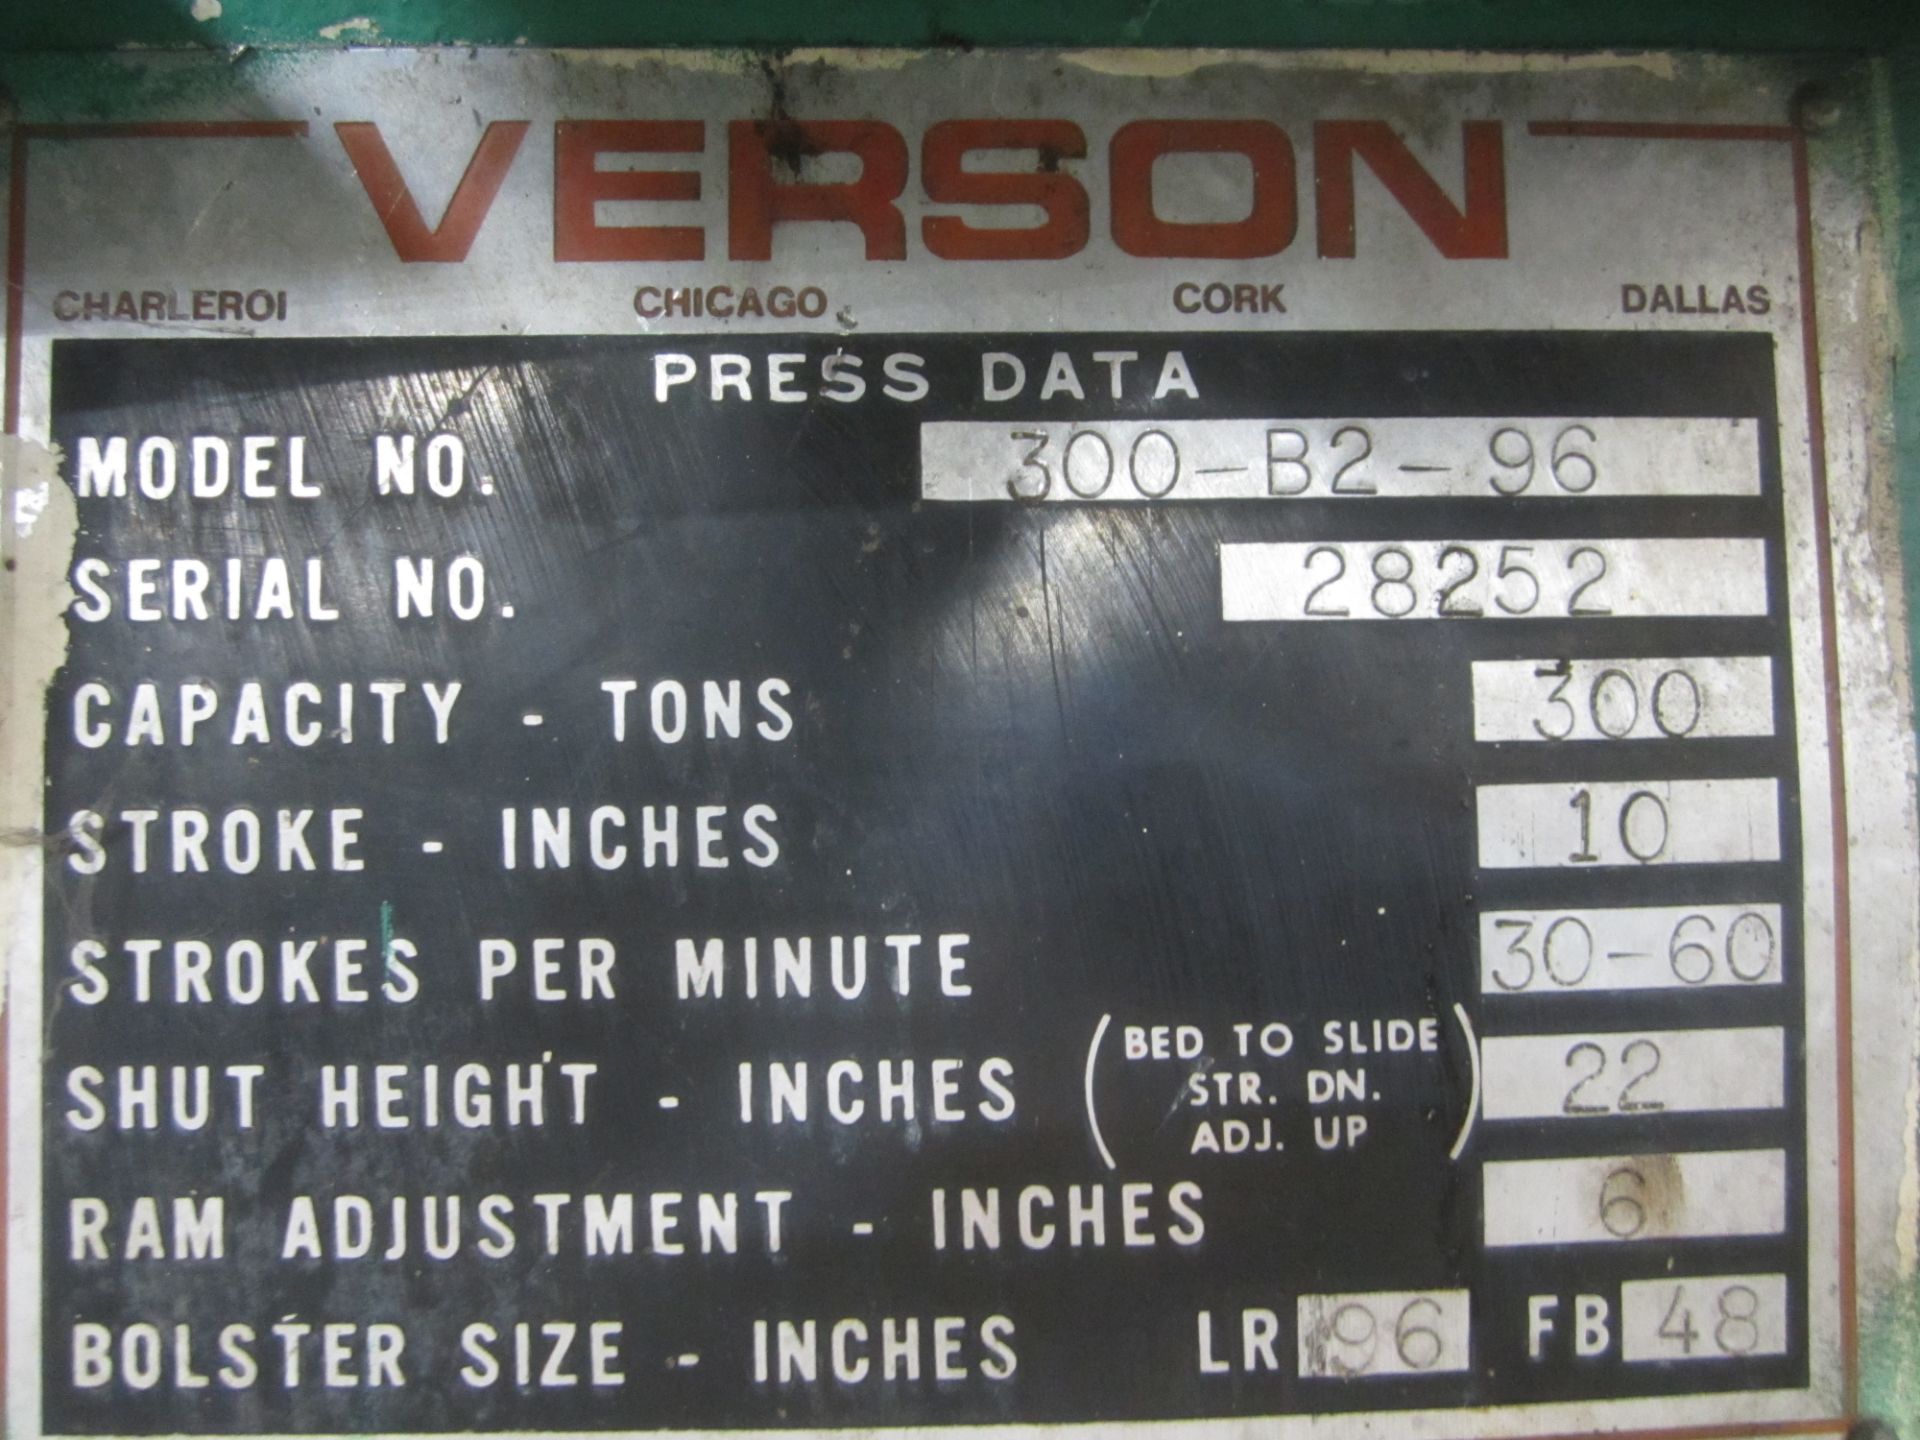 Verson Model 300-B2-96 Straight Side Press, s/n 28252, 300 Ton, 10” Stroke, 22” Shut Height, 6” - Image 10 of 10